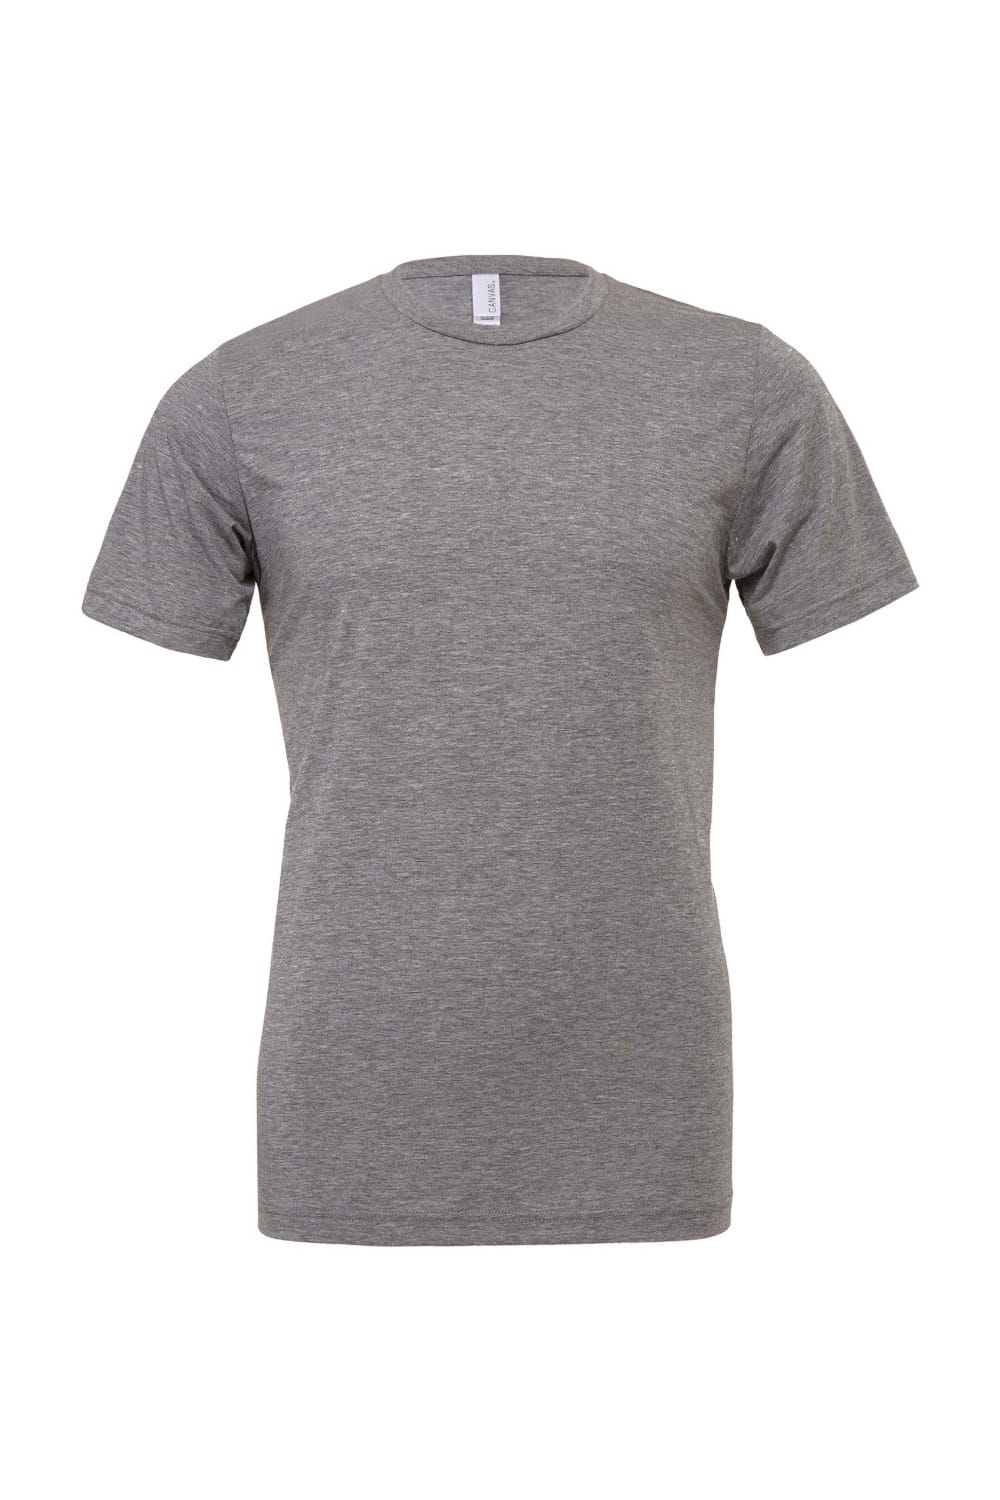 Canvas Mens Triblend Crew Neck Plain Short Sleeve T-Shirt (Grey Triblend)